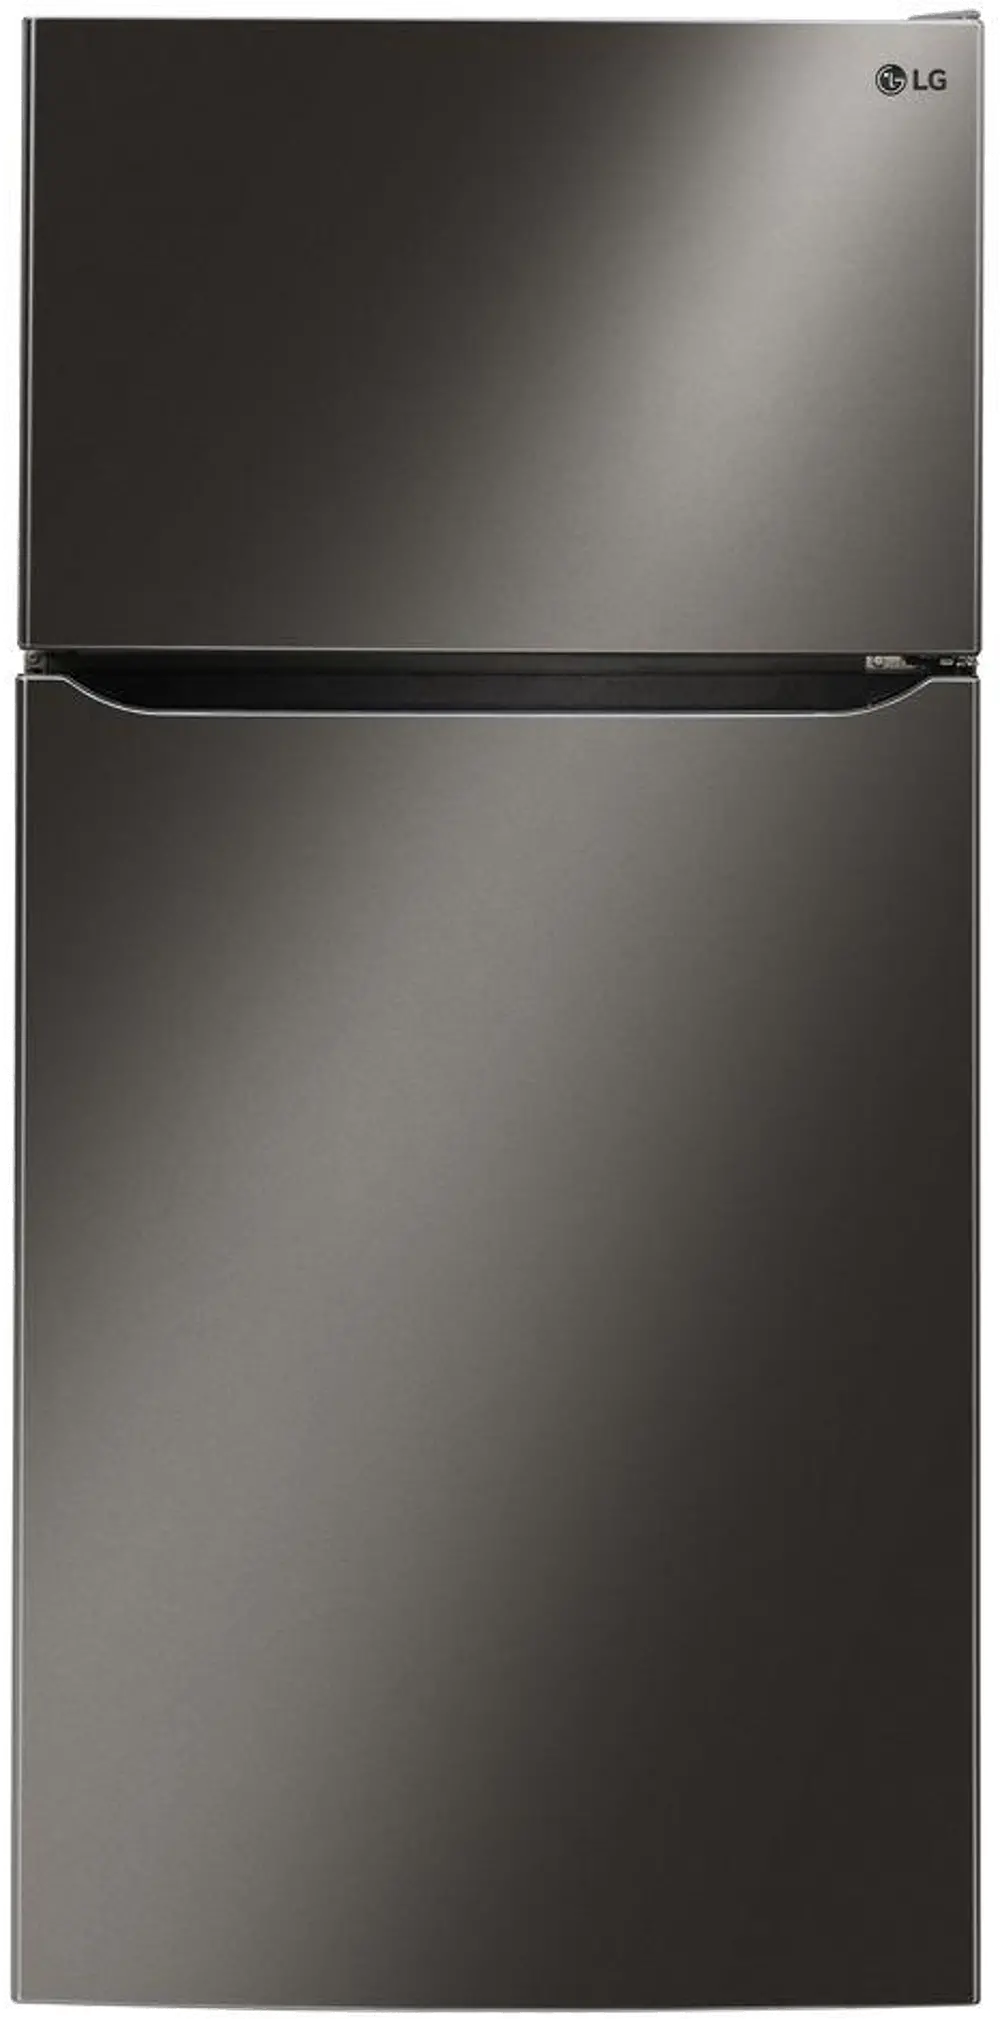 LTCS24223D LG 23.8 cu. ft. Top Freezer Refrigerator - 33 Inch Black Stainless Steel-1